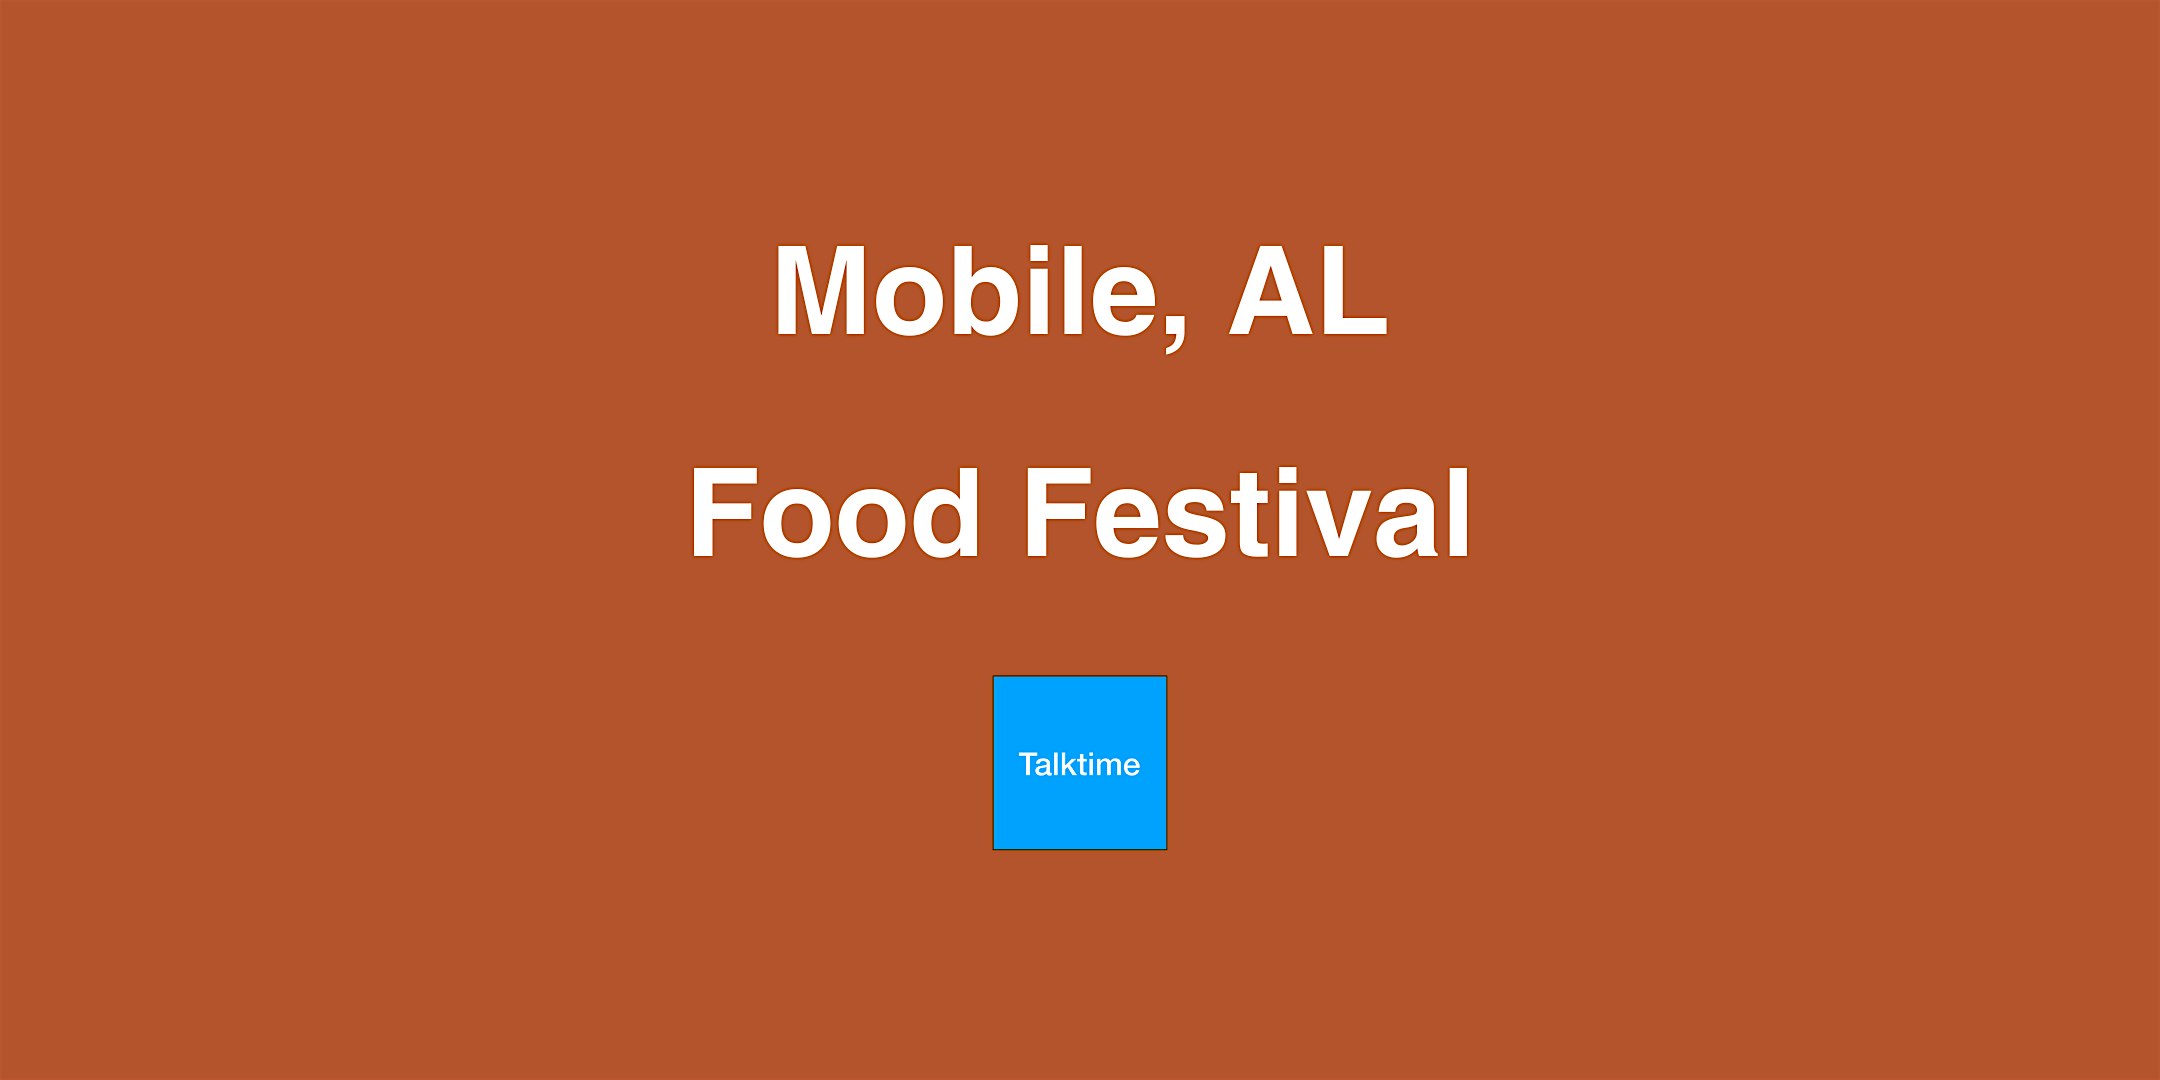 Food Festival - Mobile